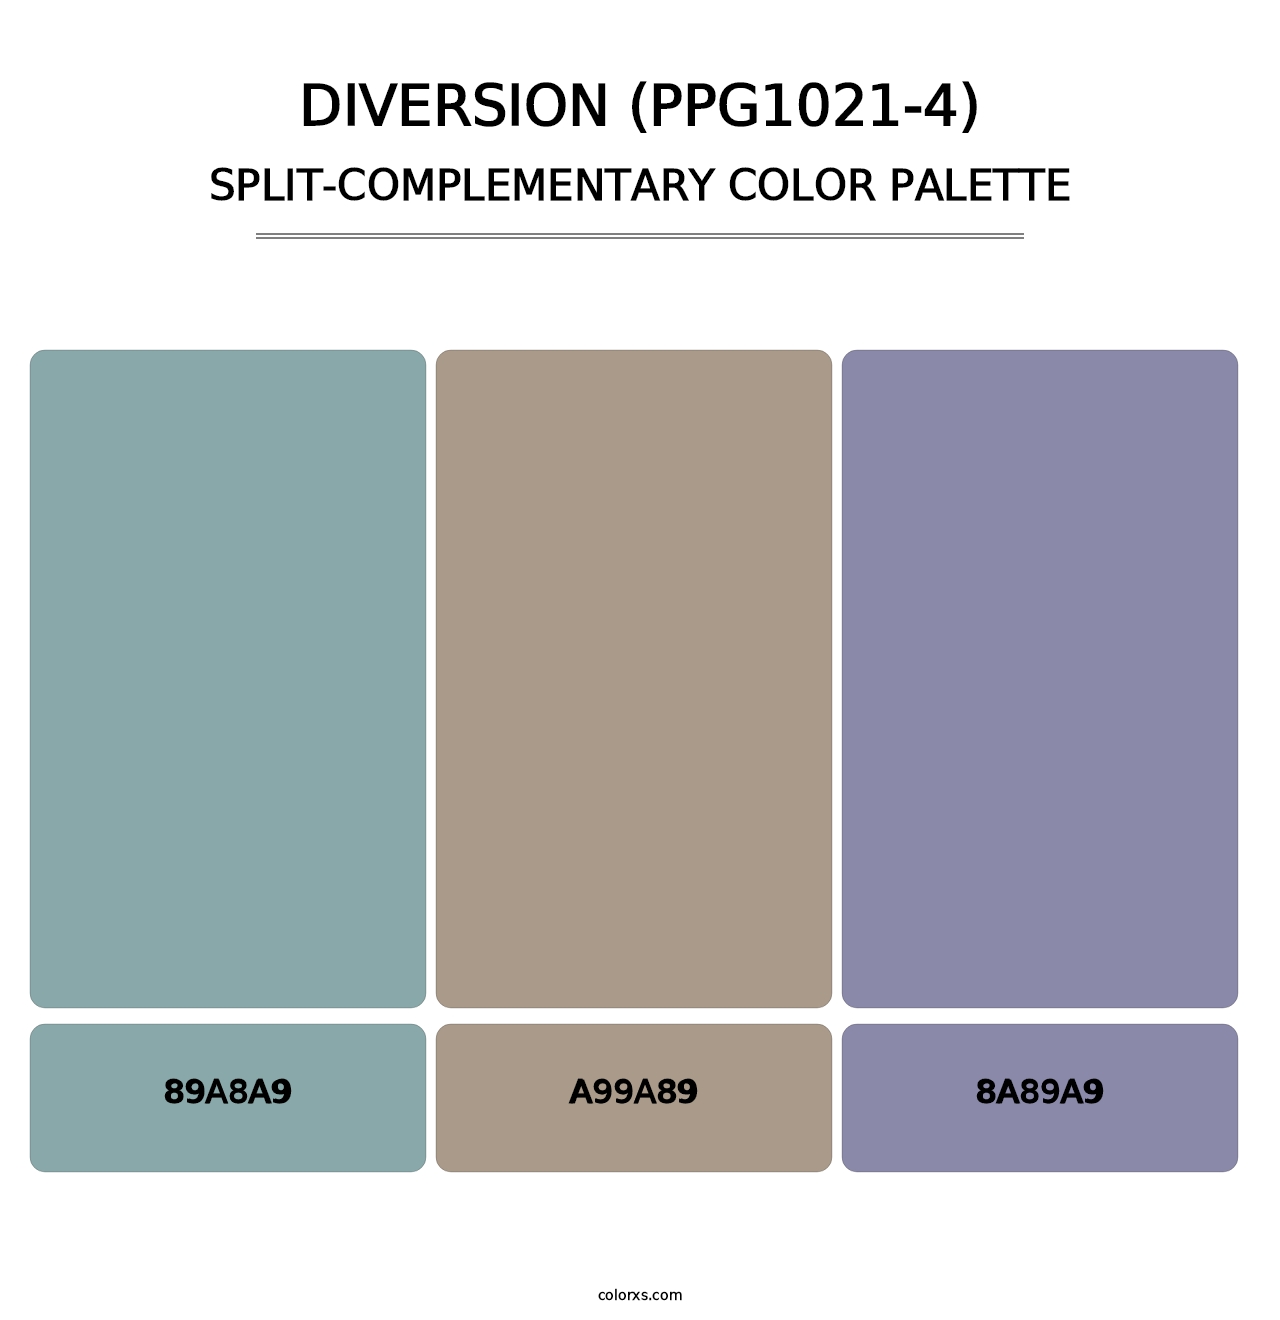 Diversion (PPG1021-4) - Split-Complementary Color Palette